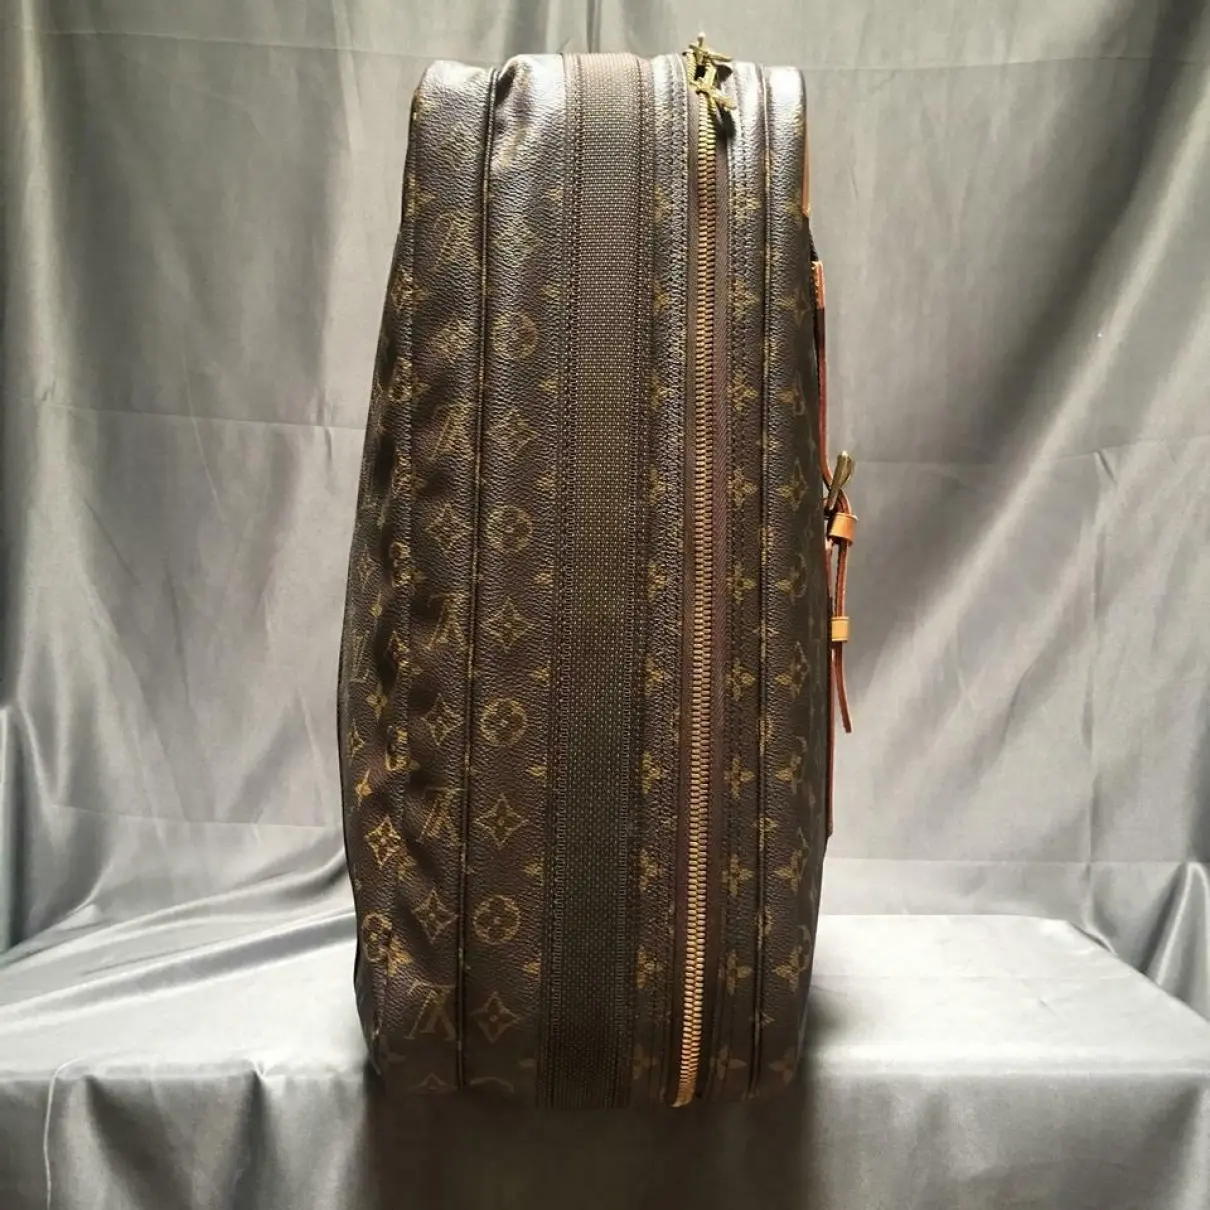 Luxury Louis Vuitton Travel bags Women - Vintage